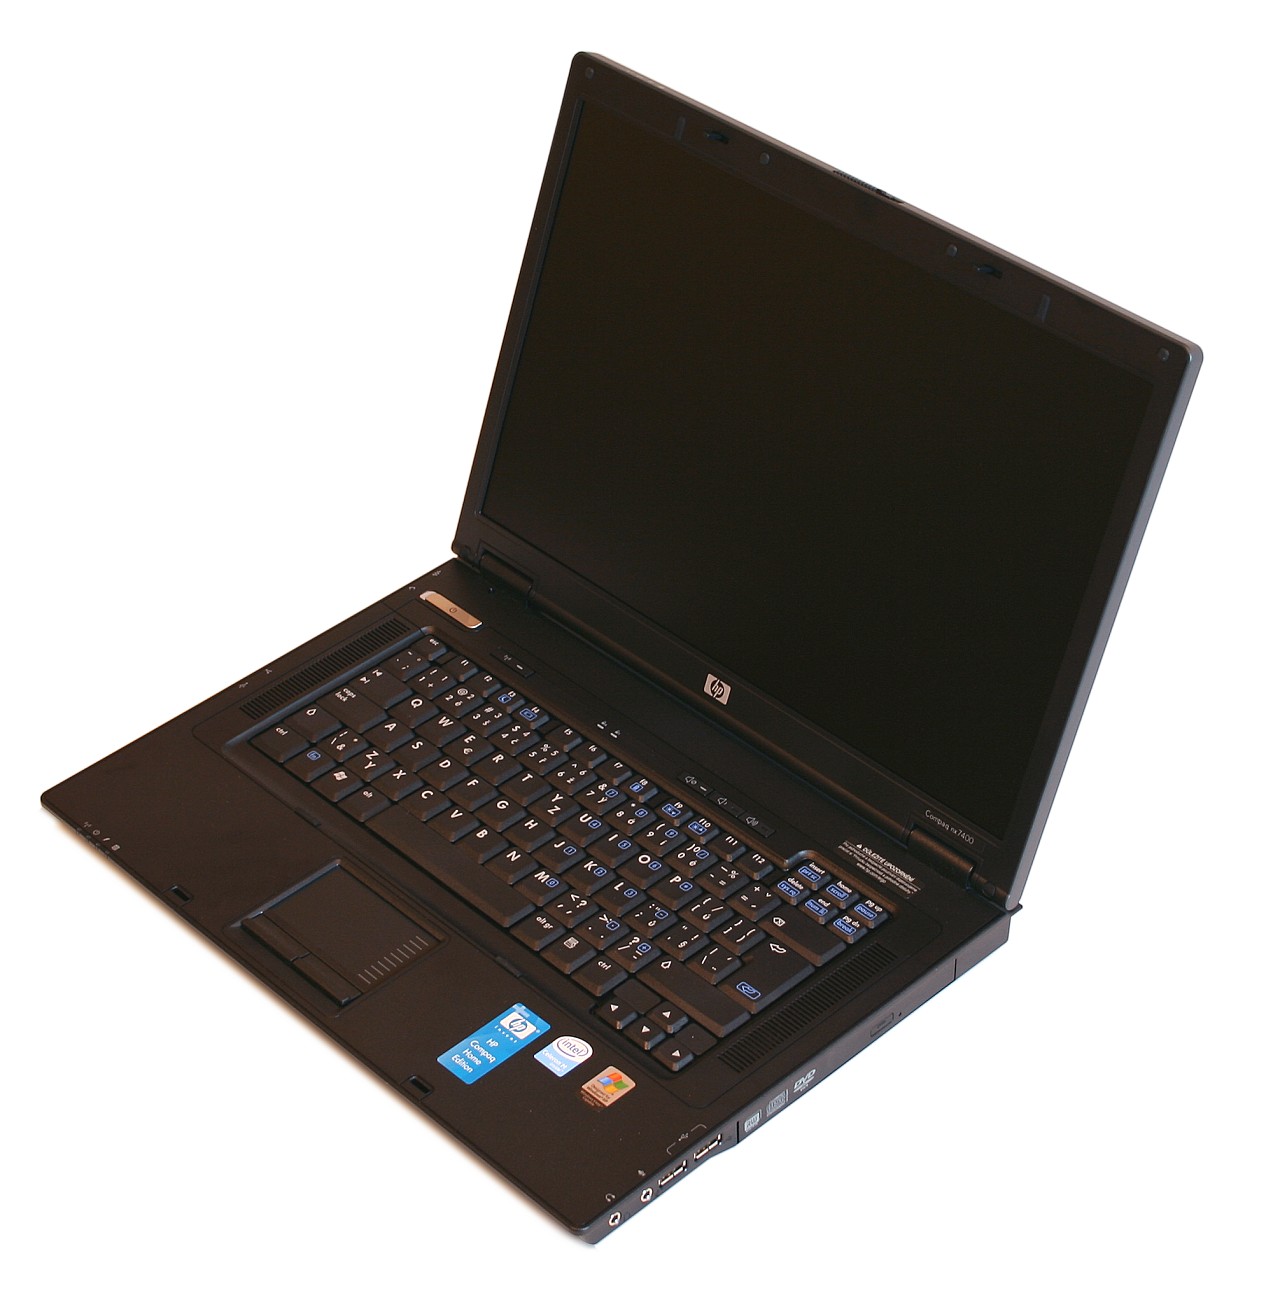 HP Compaq nx7400 - kancelářský pracant